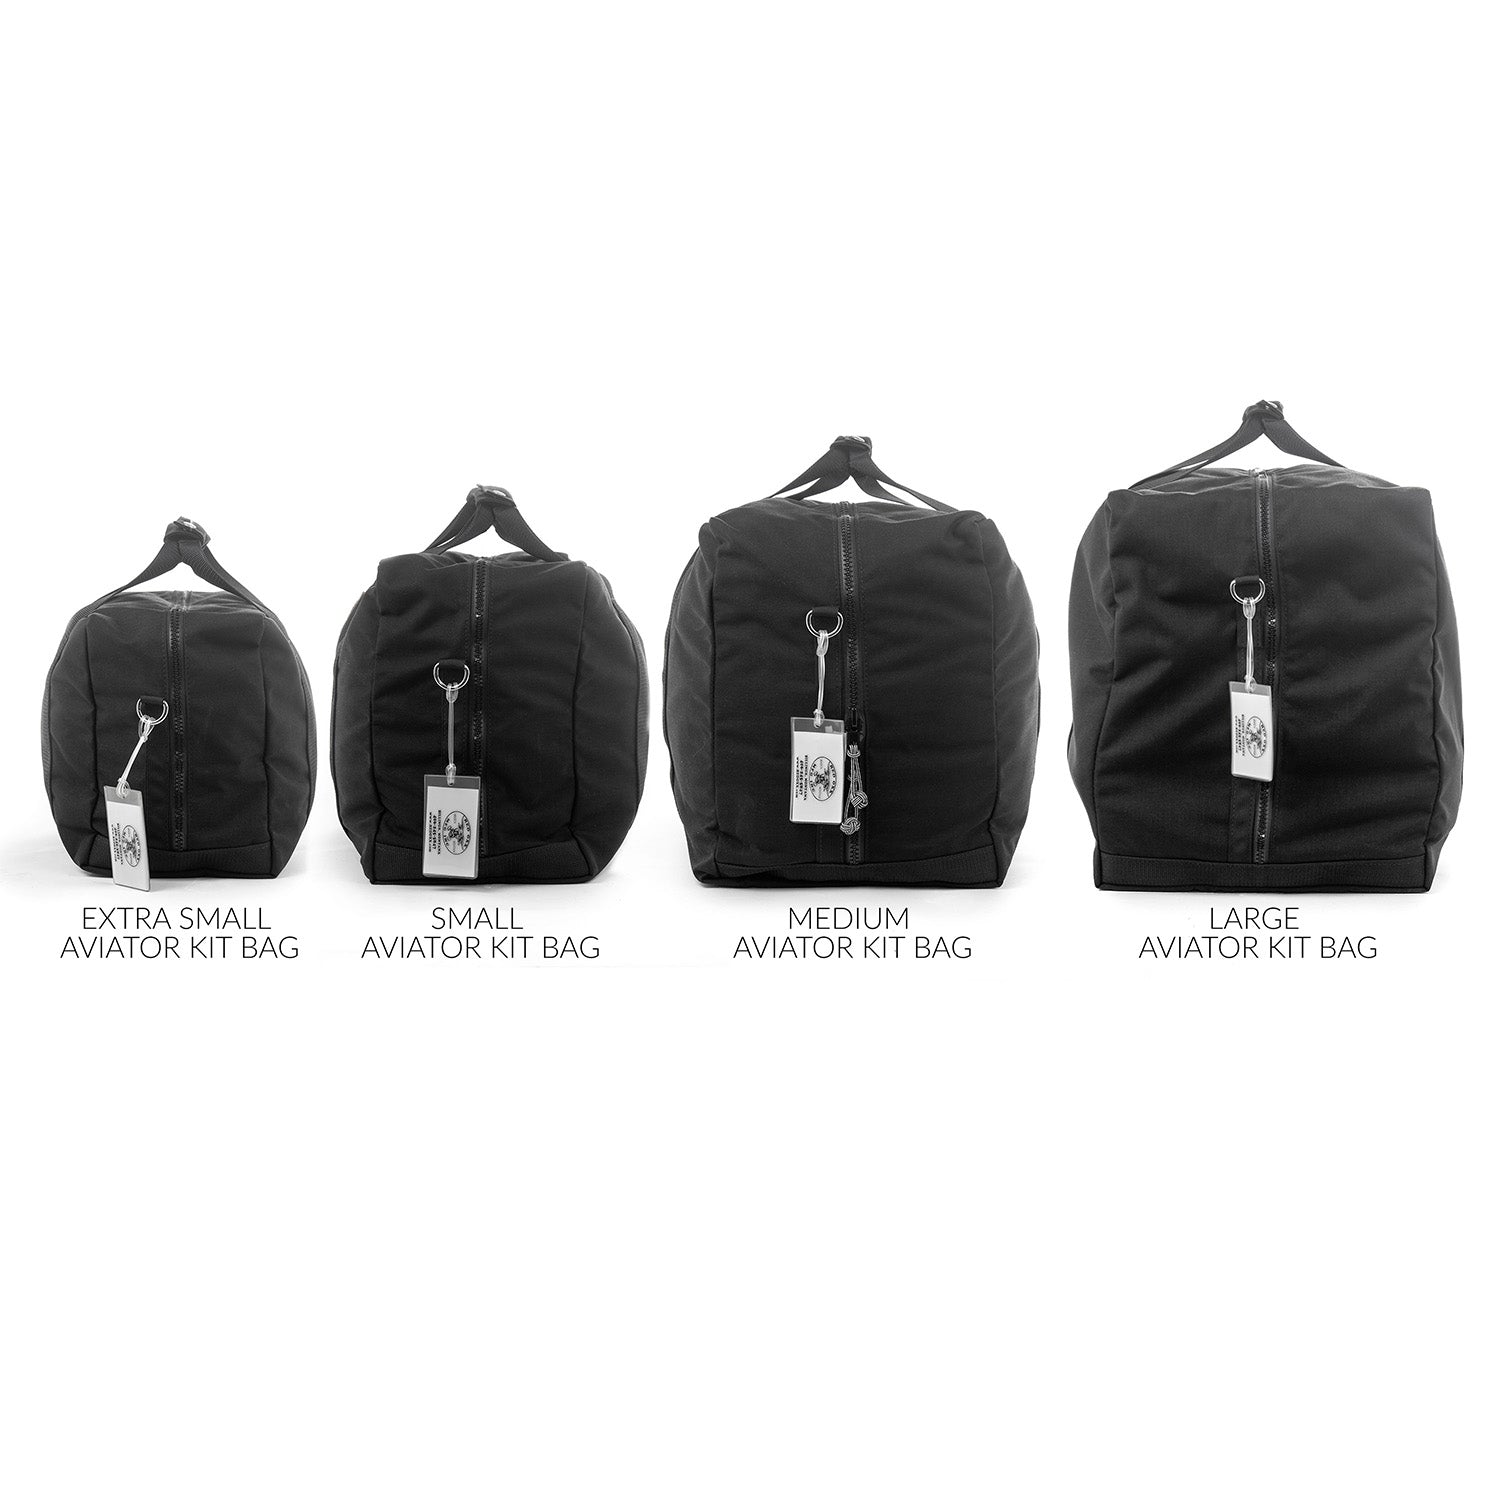 From Left to Right- Extra Small Aviator Kit Bag, Small Aviator Kit Bag, Medium Aviator Kit Bag , Large Aviator Kit Bag 